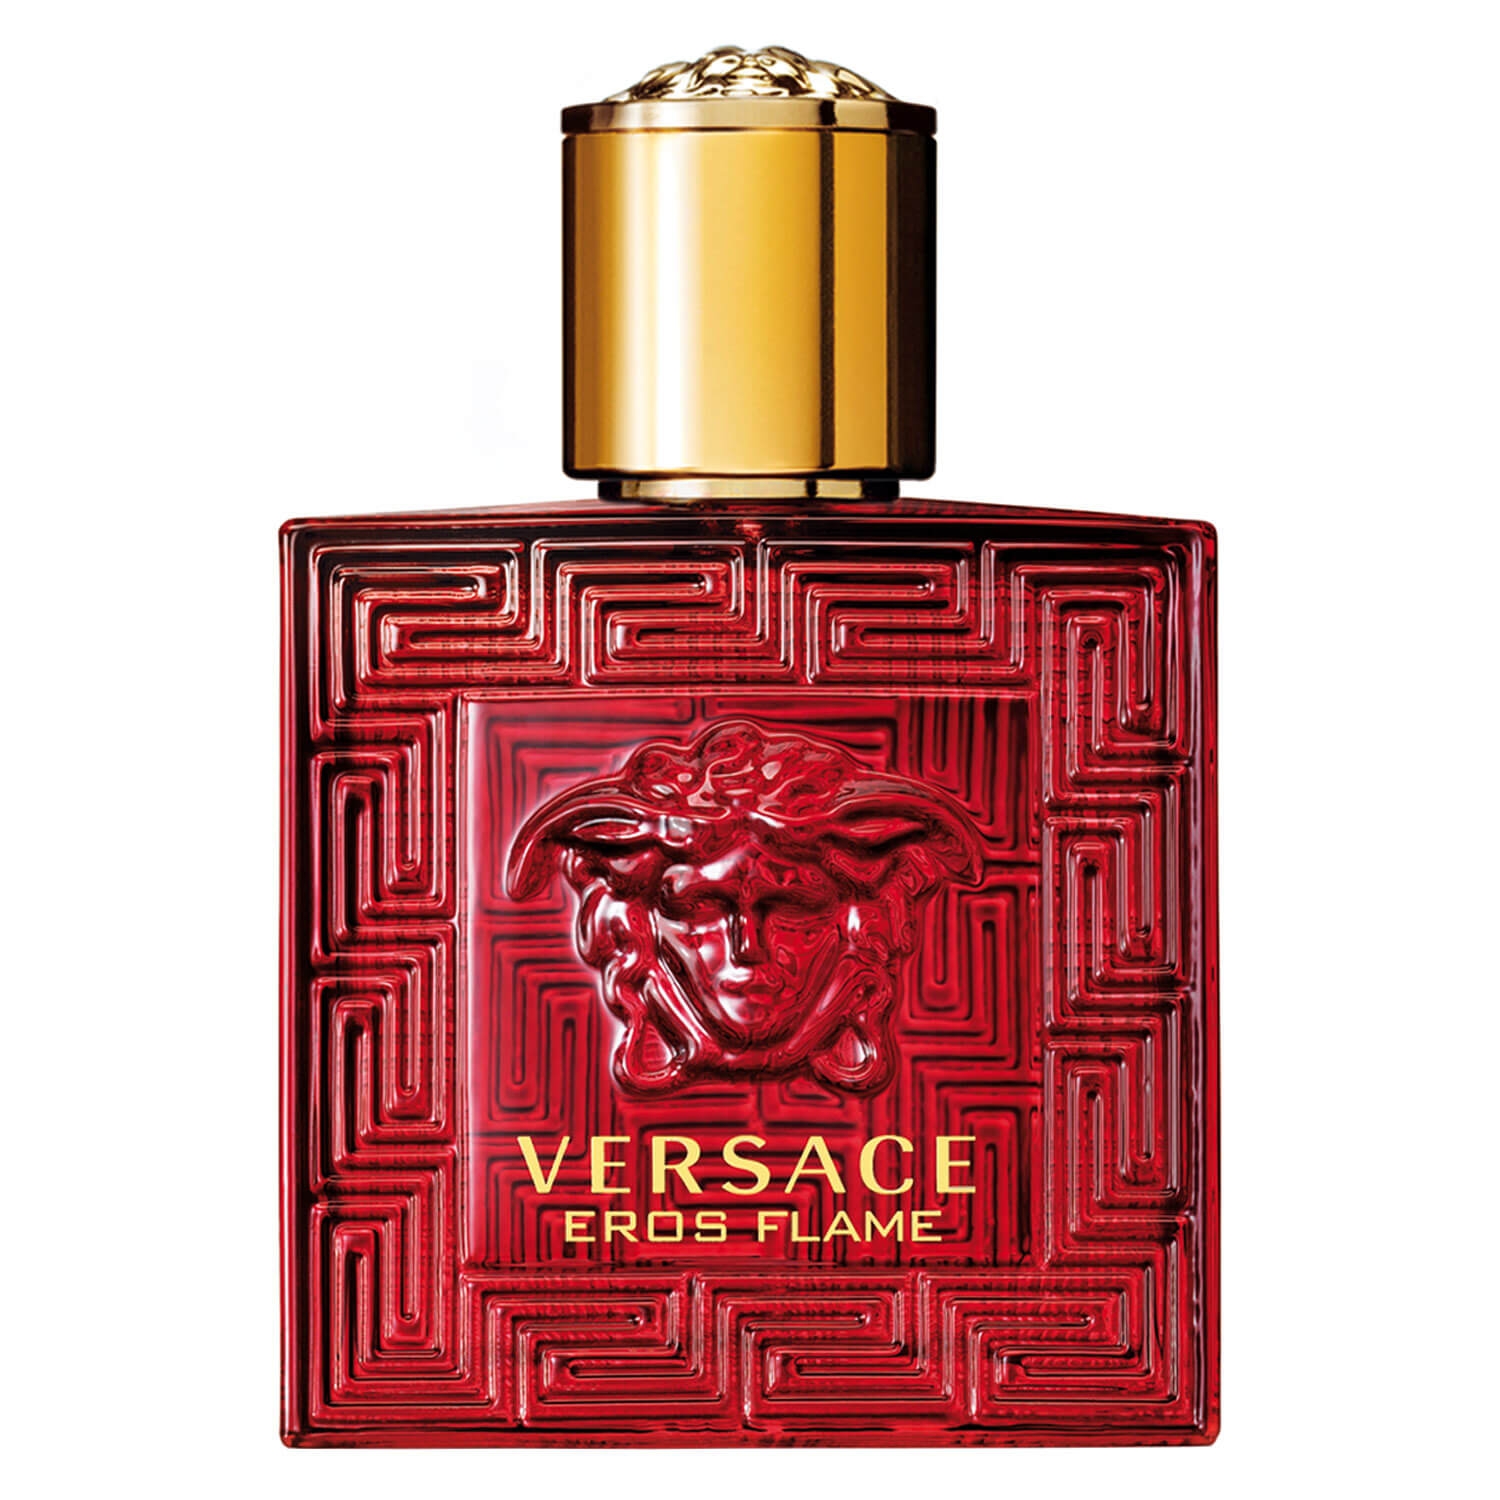 Produktbild von Versace Eros - Flame Eau de Parfum Natural Spray